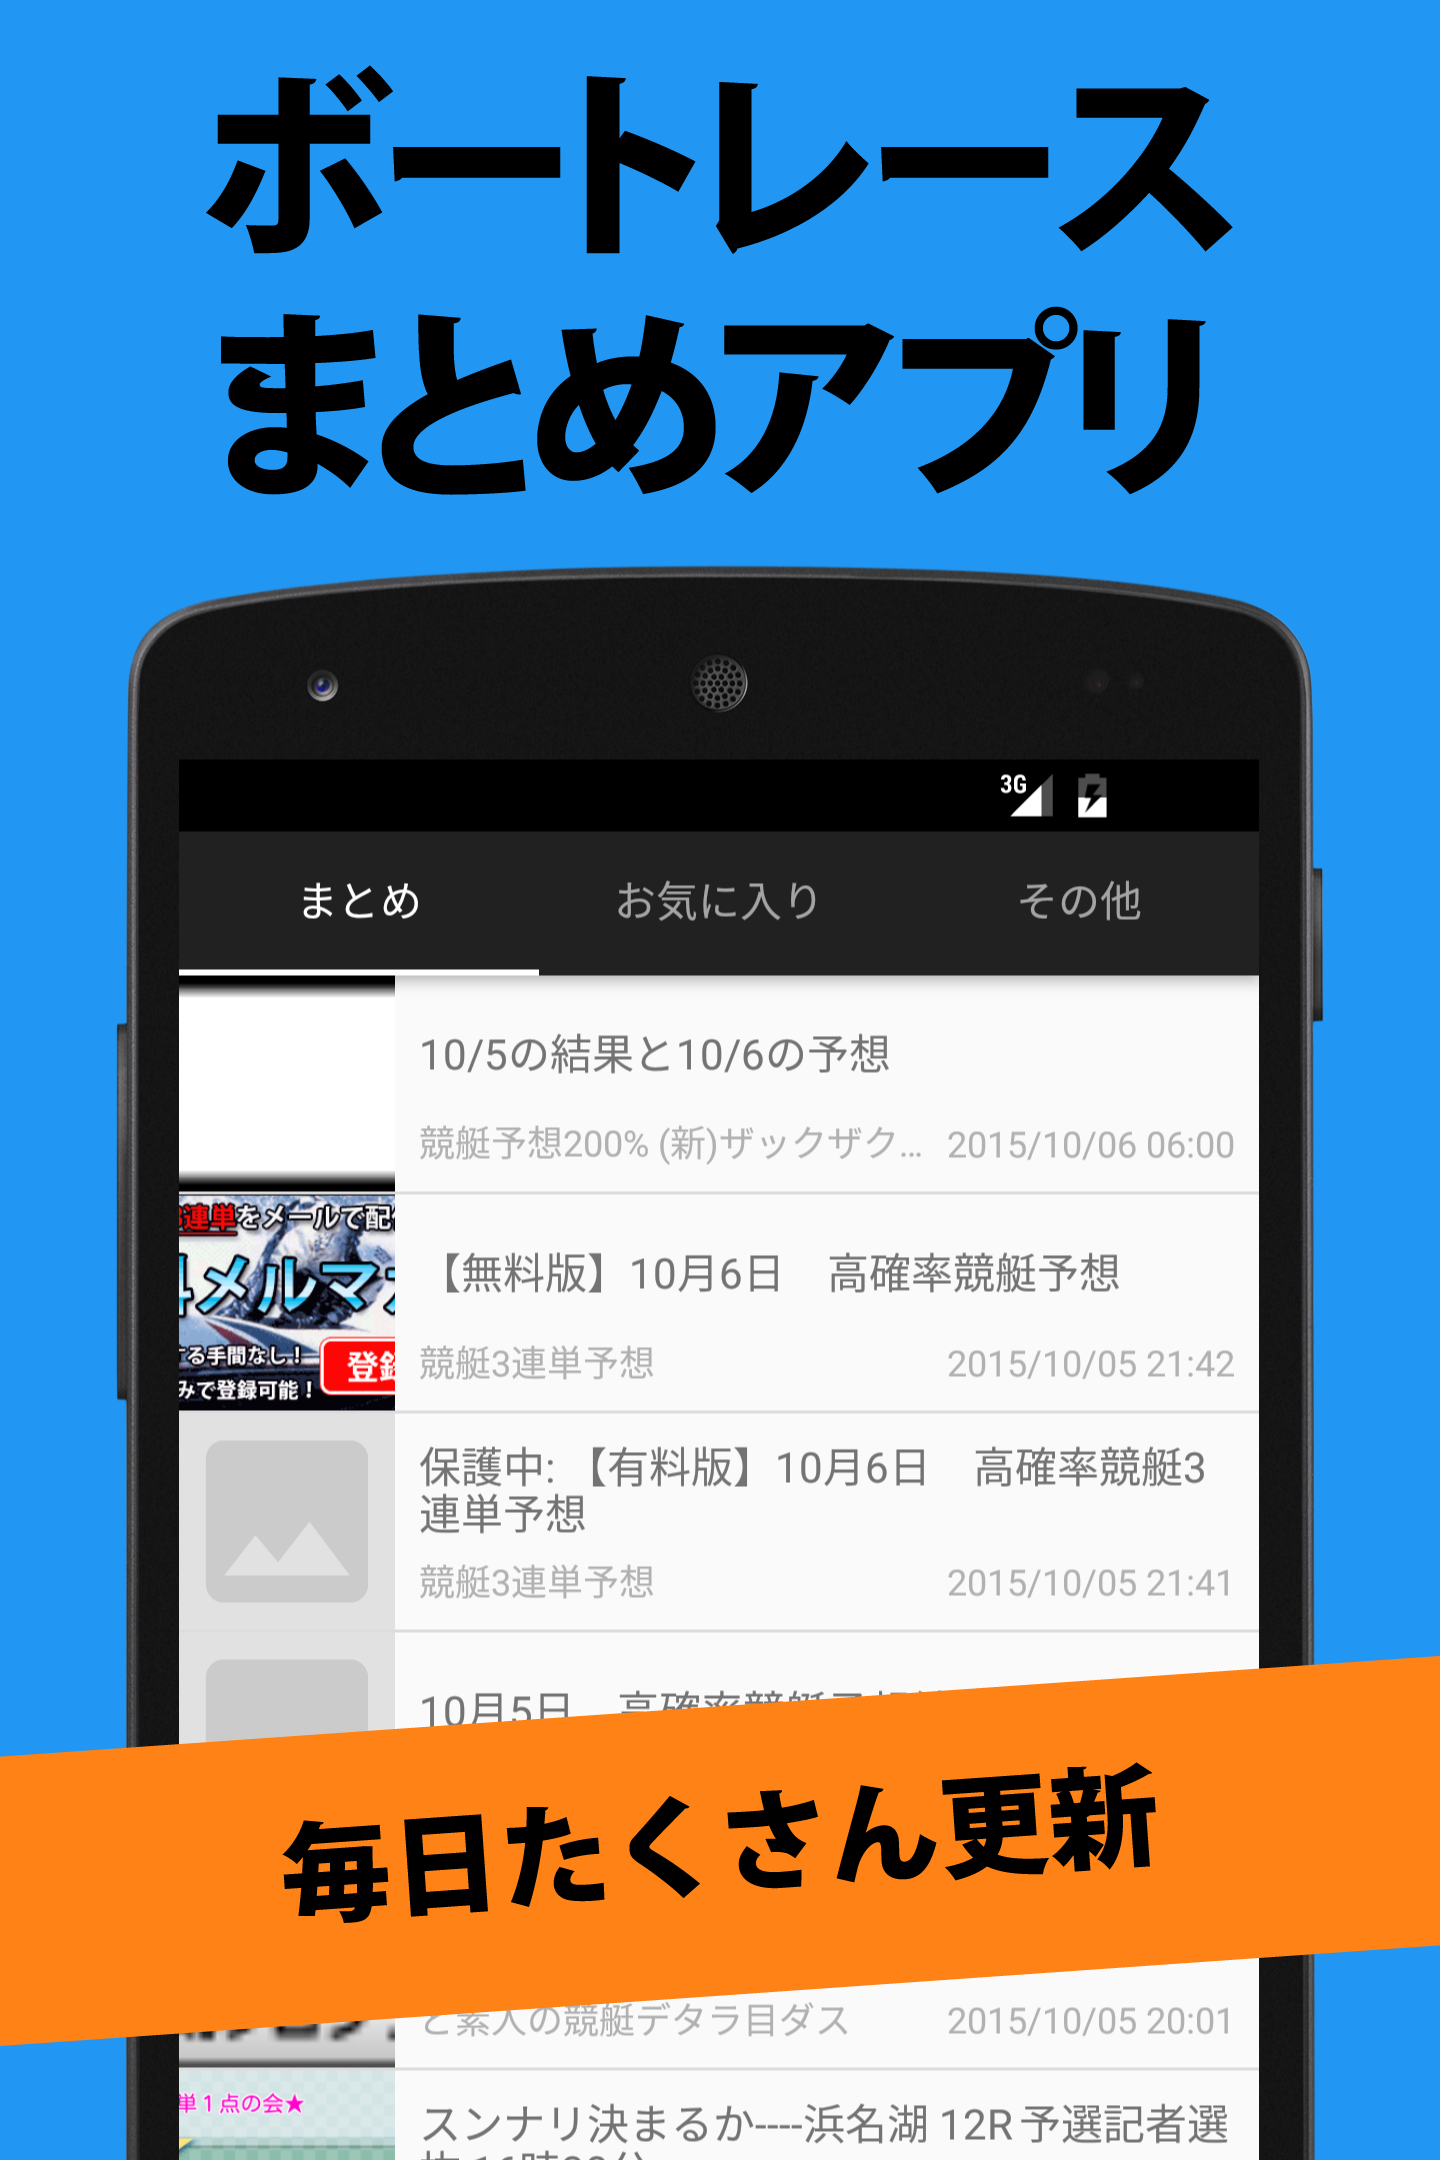 Android application 競艇まとめ for ボートレース screenshort